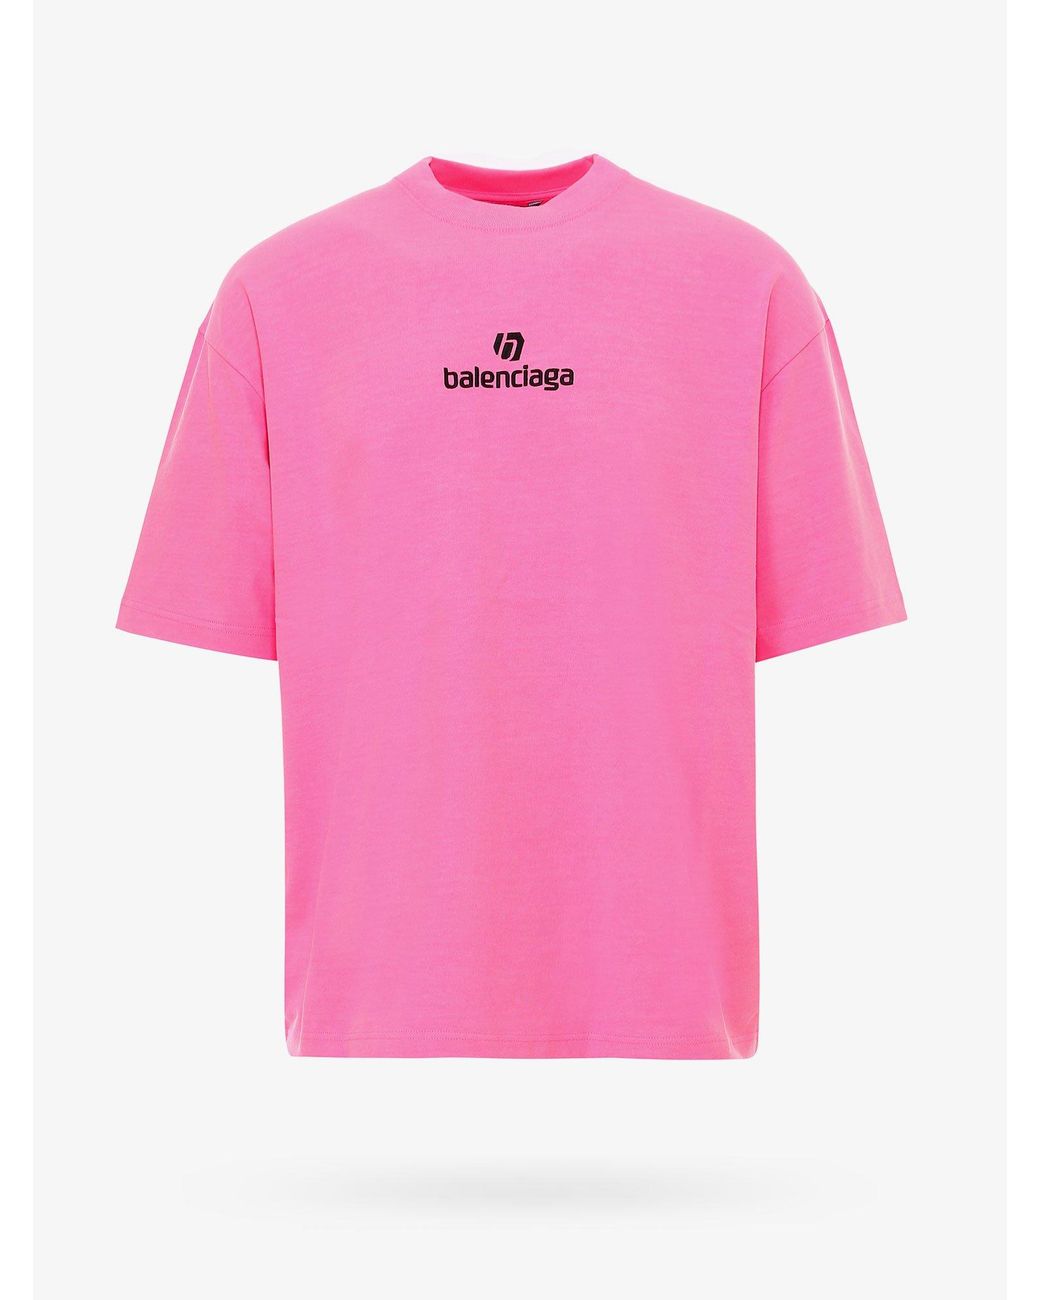 Balenciaga Cotton T-shirt in Pink for Men - Lyst